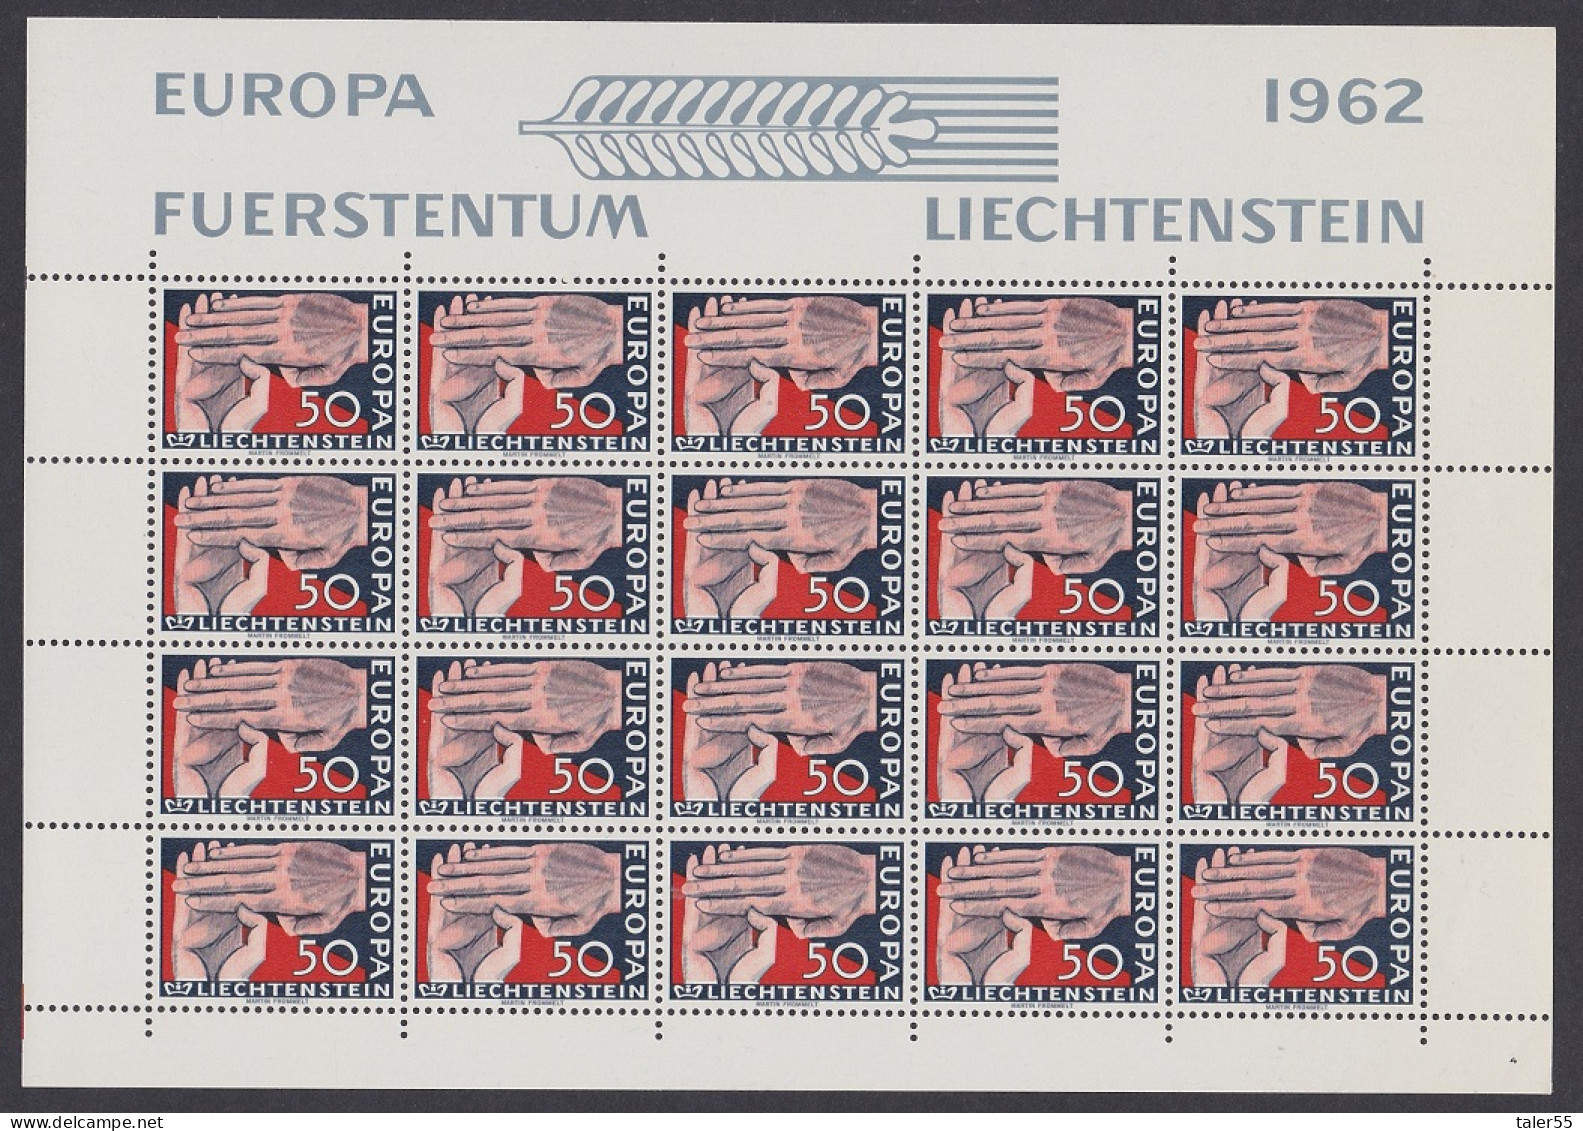 Liechtenstein Clasped Hands Europa 1c Full Sheet 1962 MNH SG#413 Sc#370 - Unused Stamps